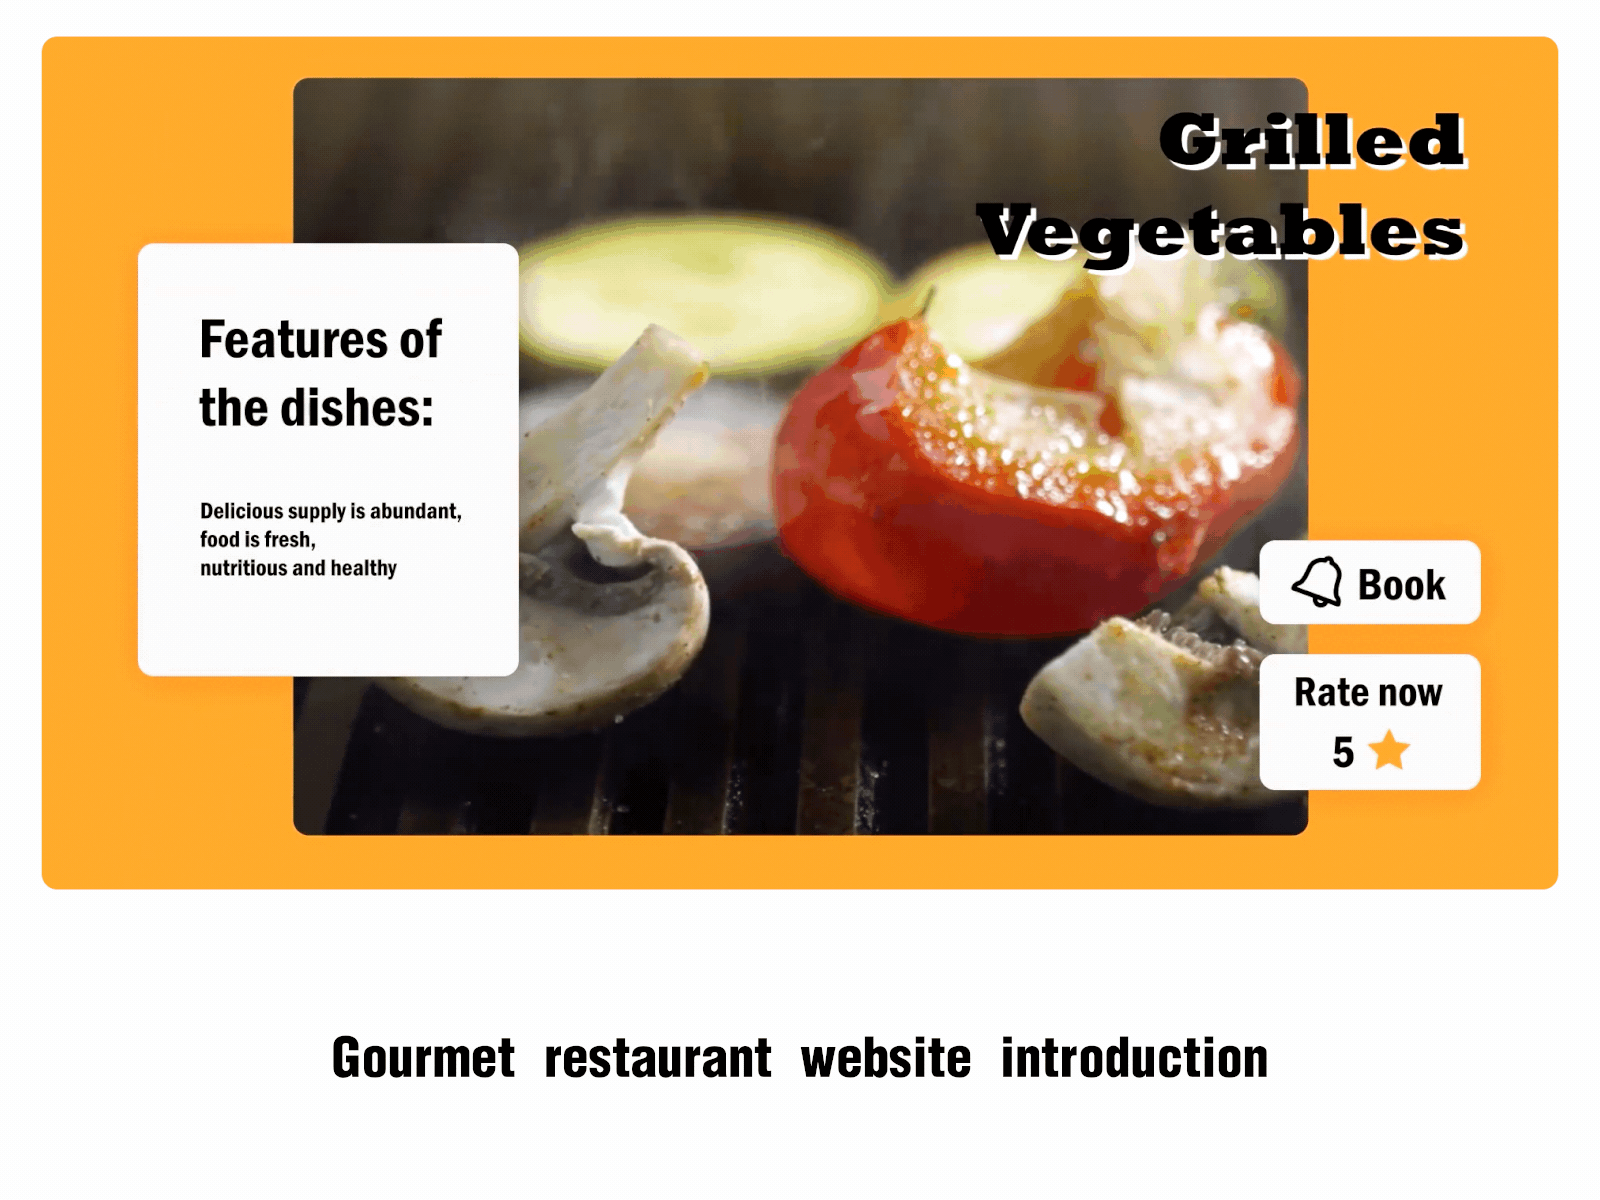 Gourmet restaurant website introduction